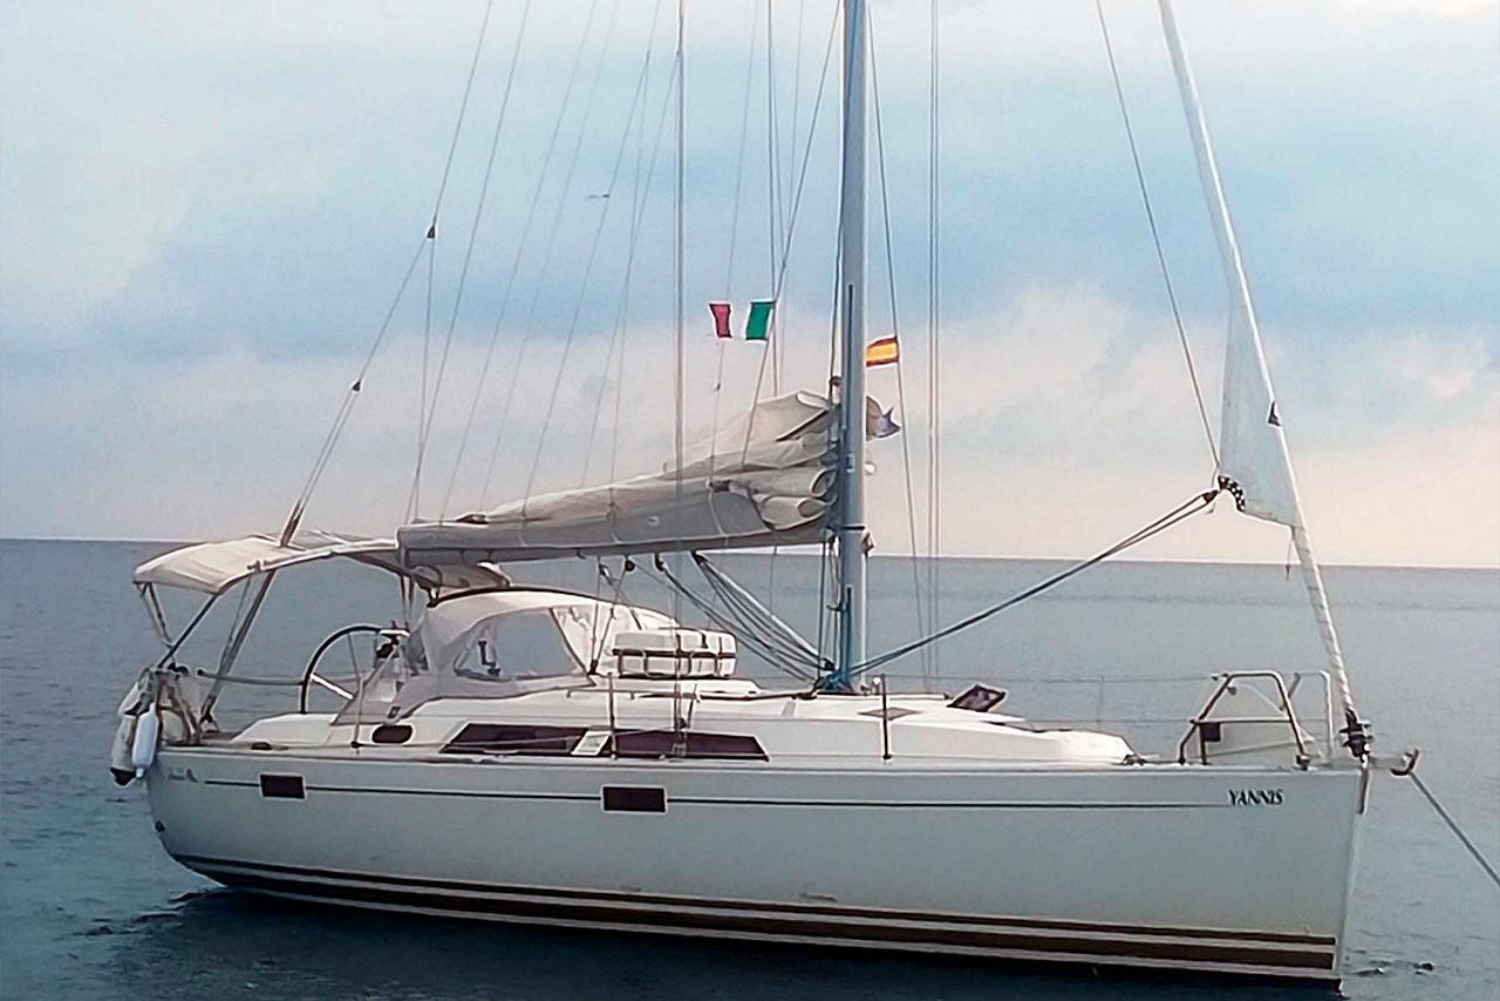 Ibiza: Sailing Day Trip to Cala Comte